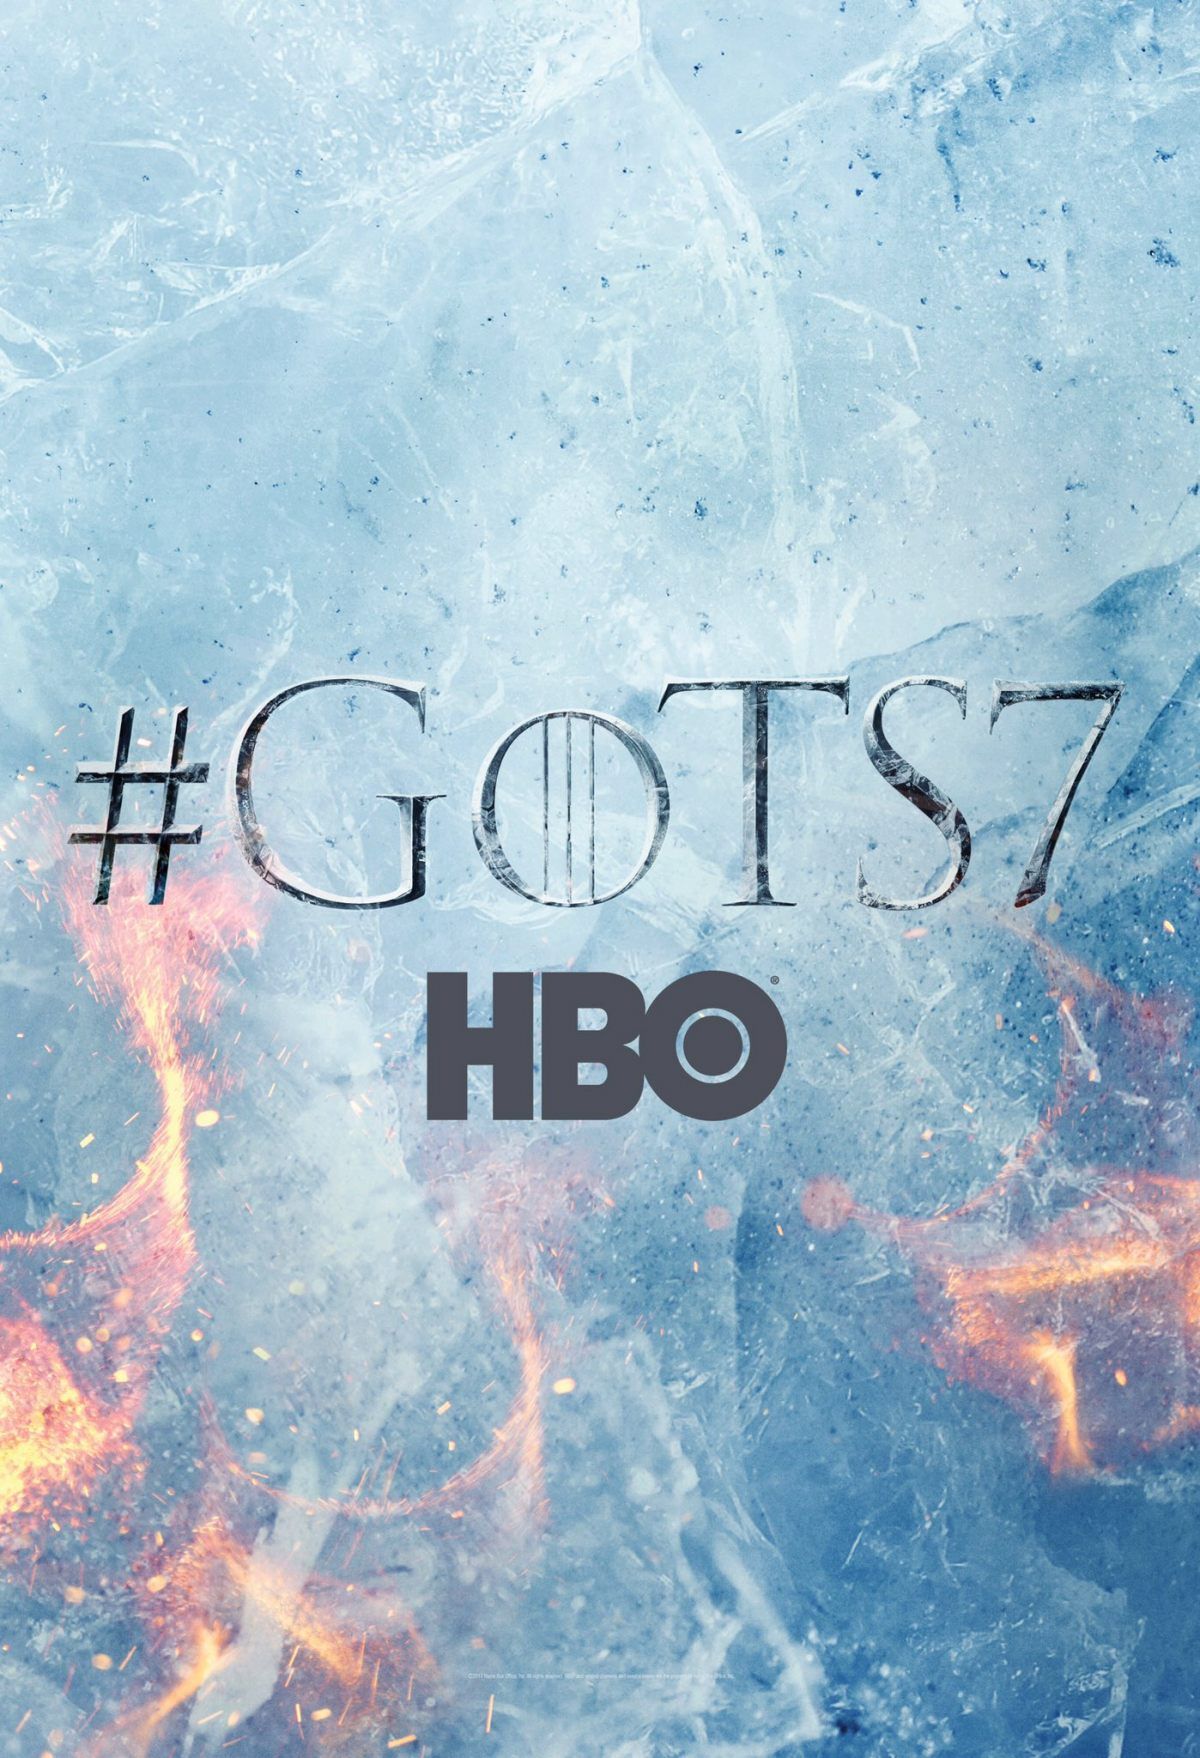 Game of Thrones Staffel 7 Start & Teaserposter